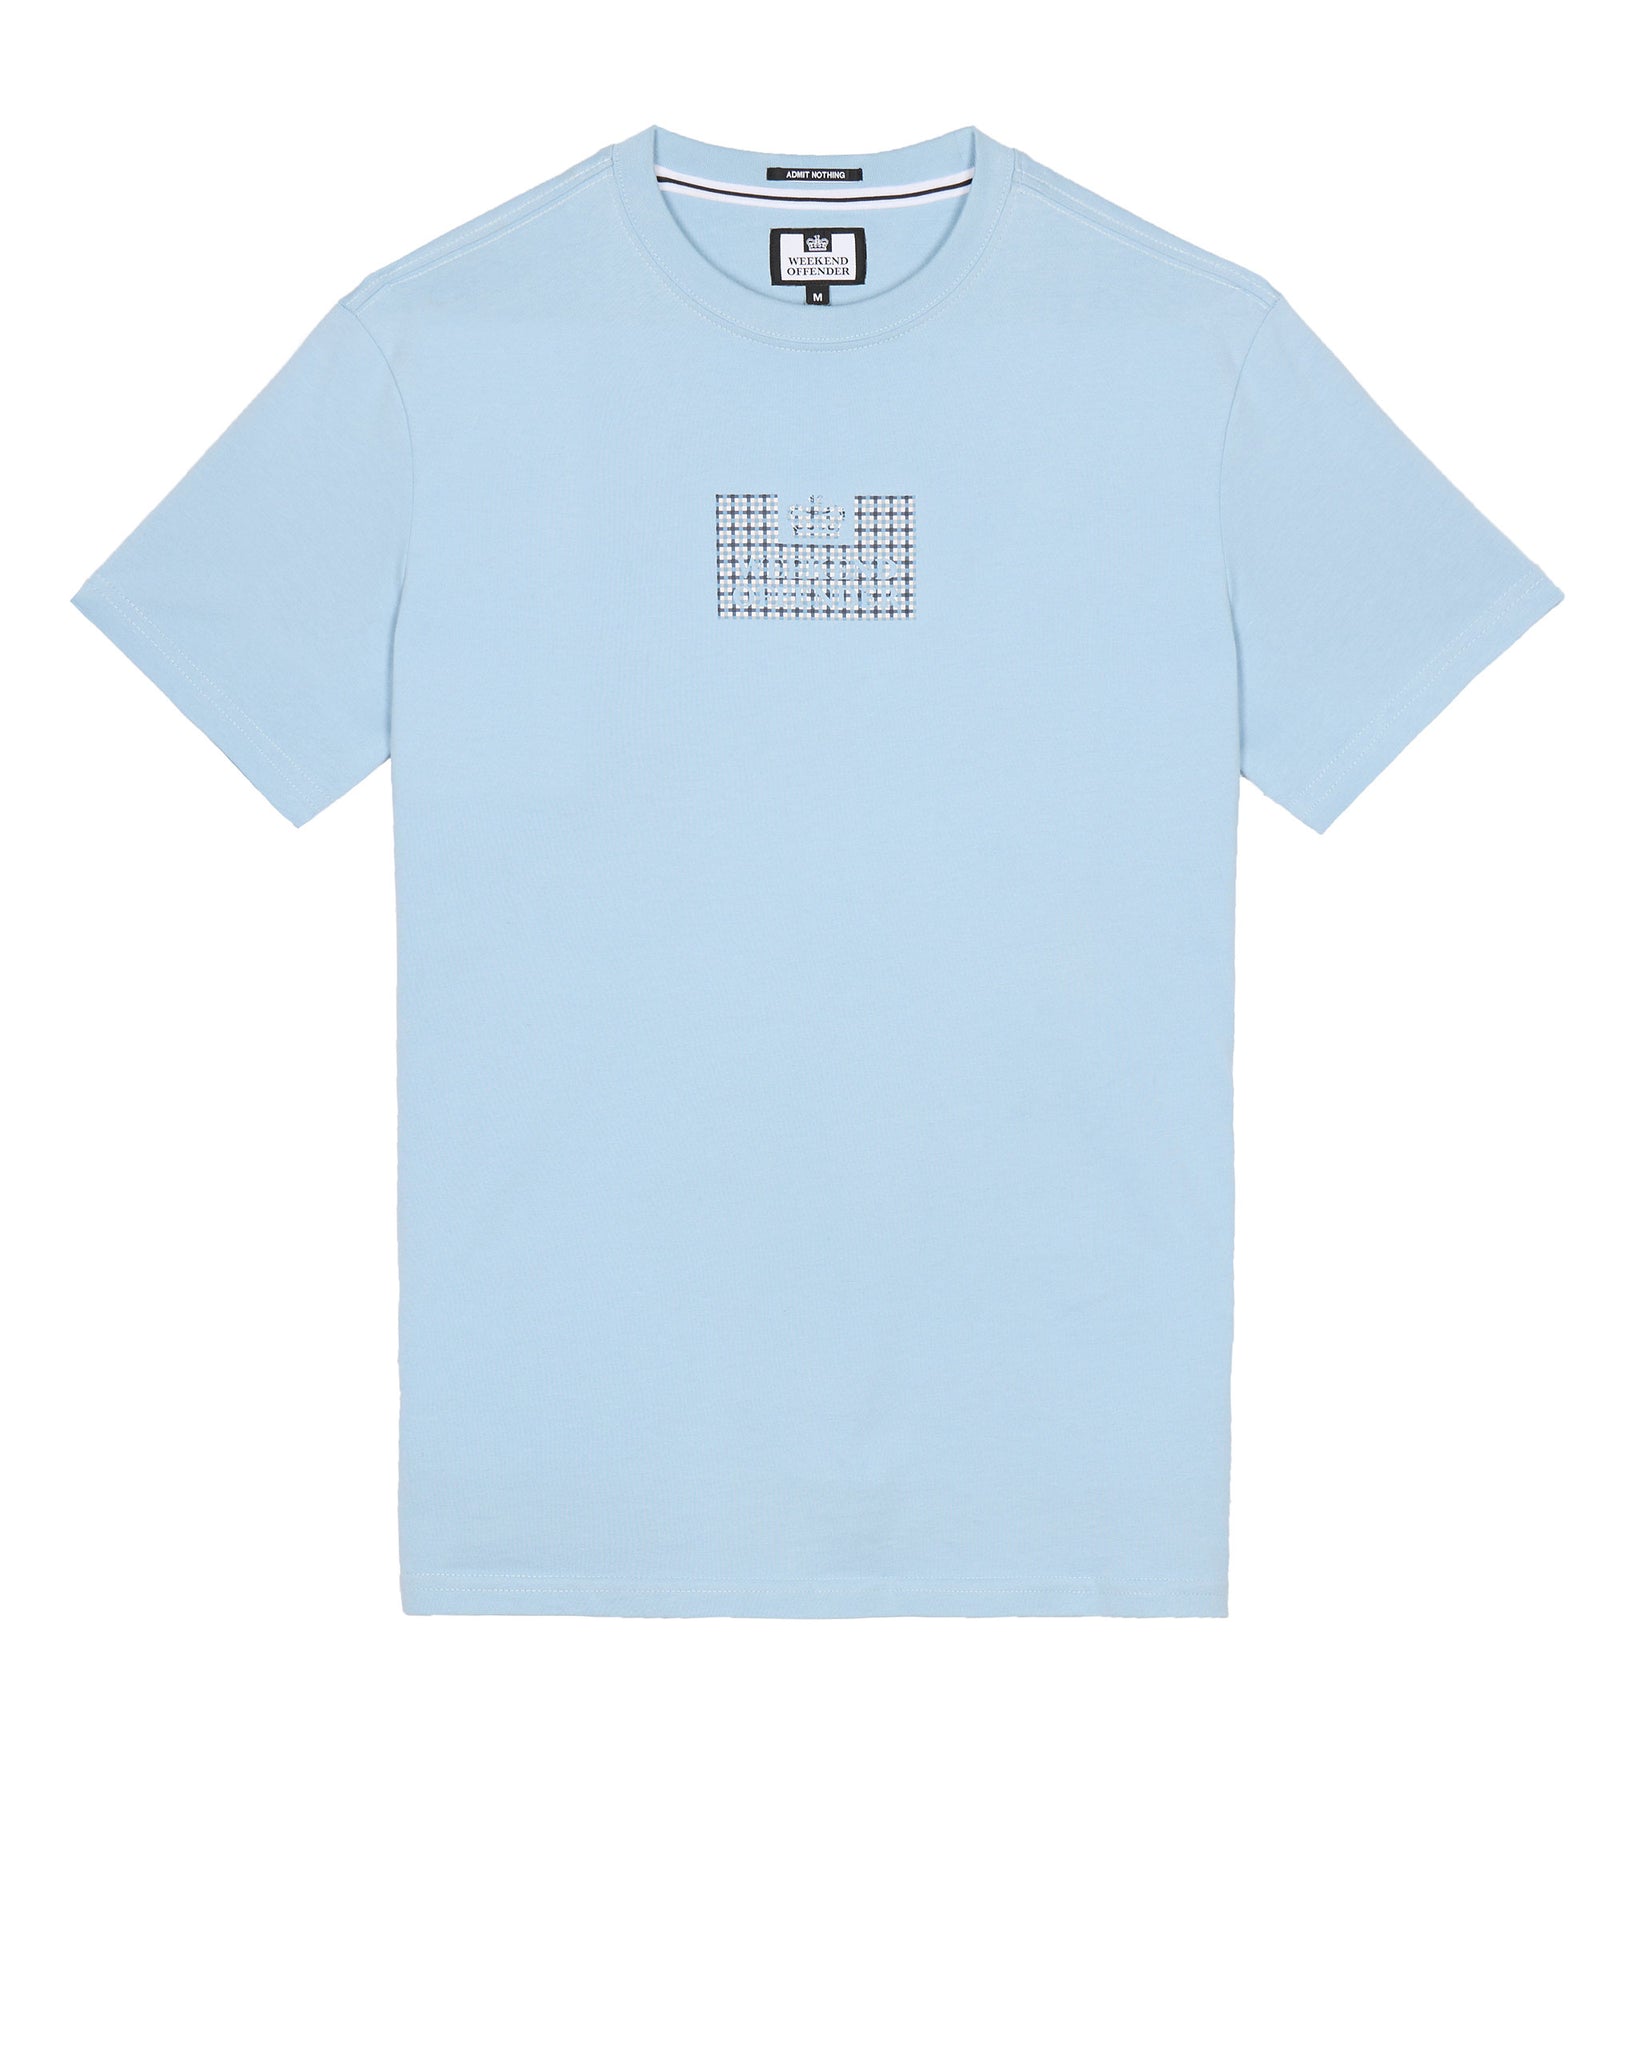 Dygas T-Shirt Winter Sky/Blue House Check